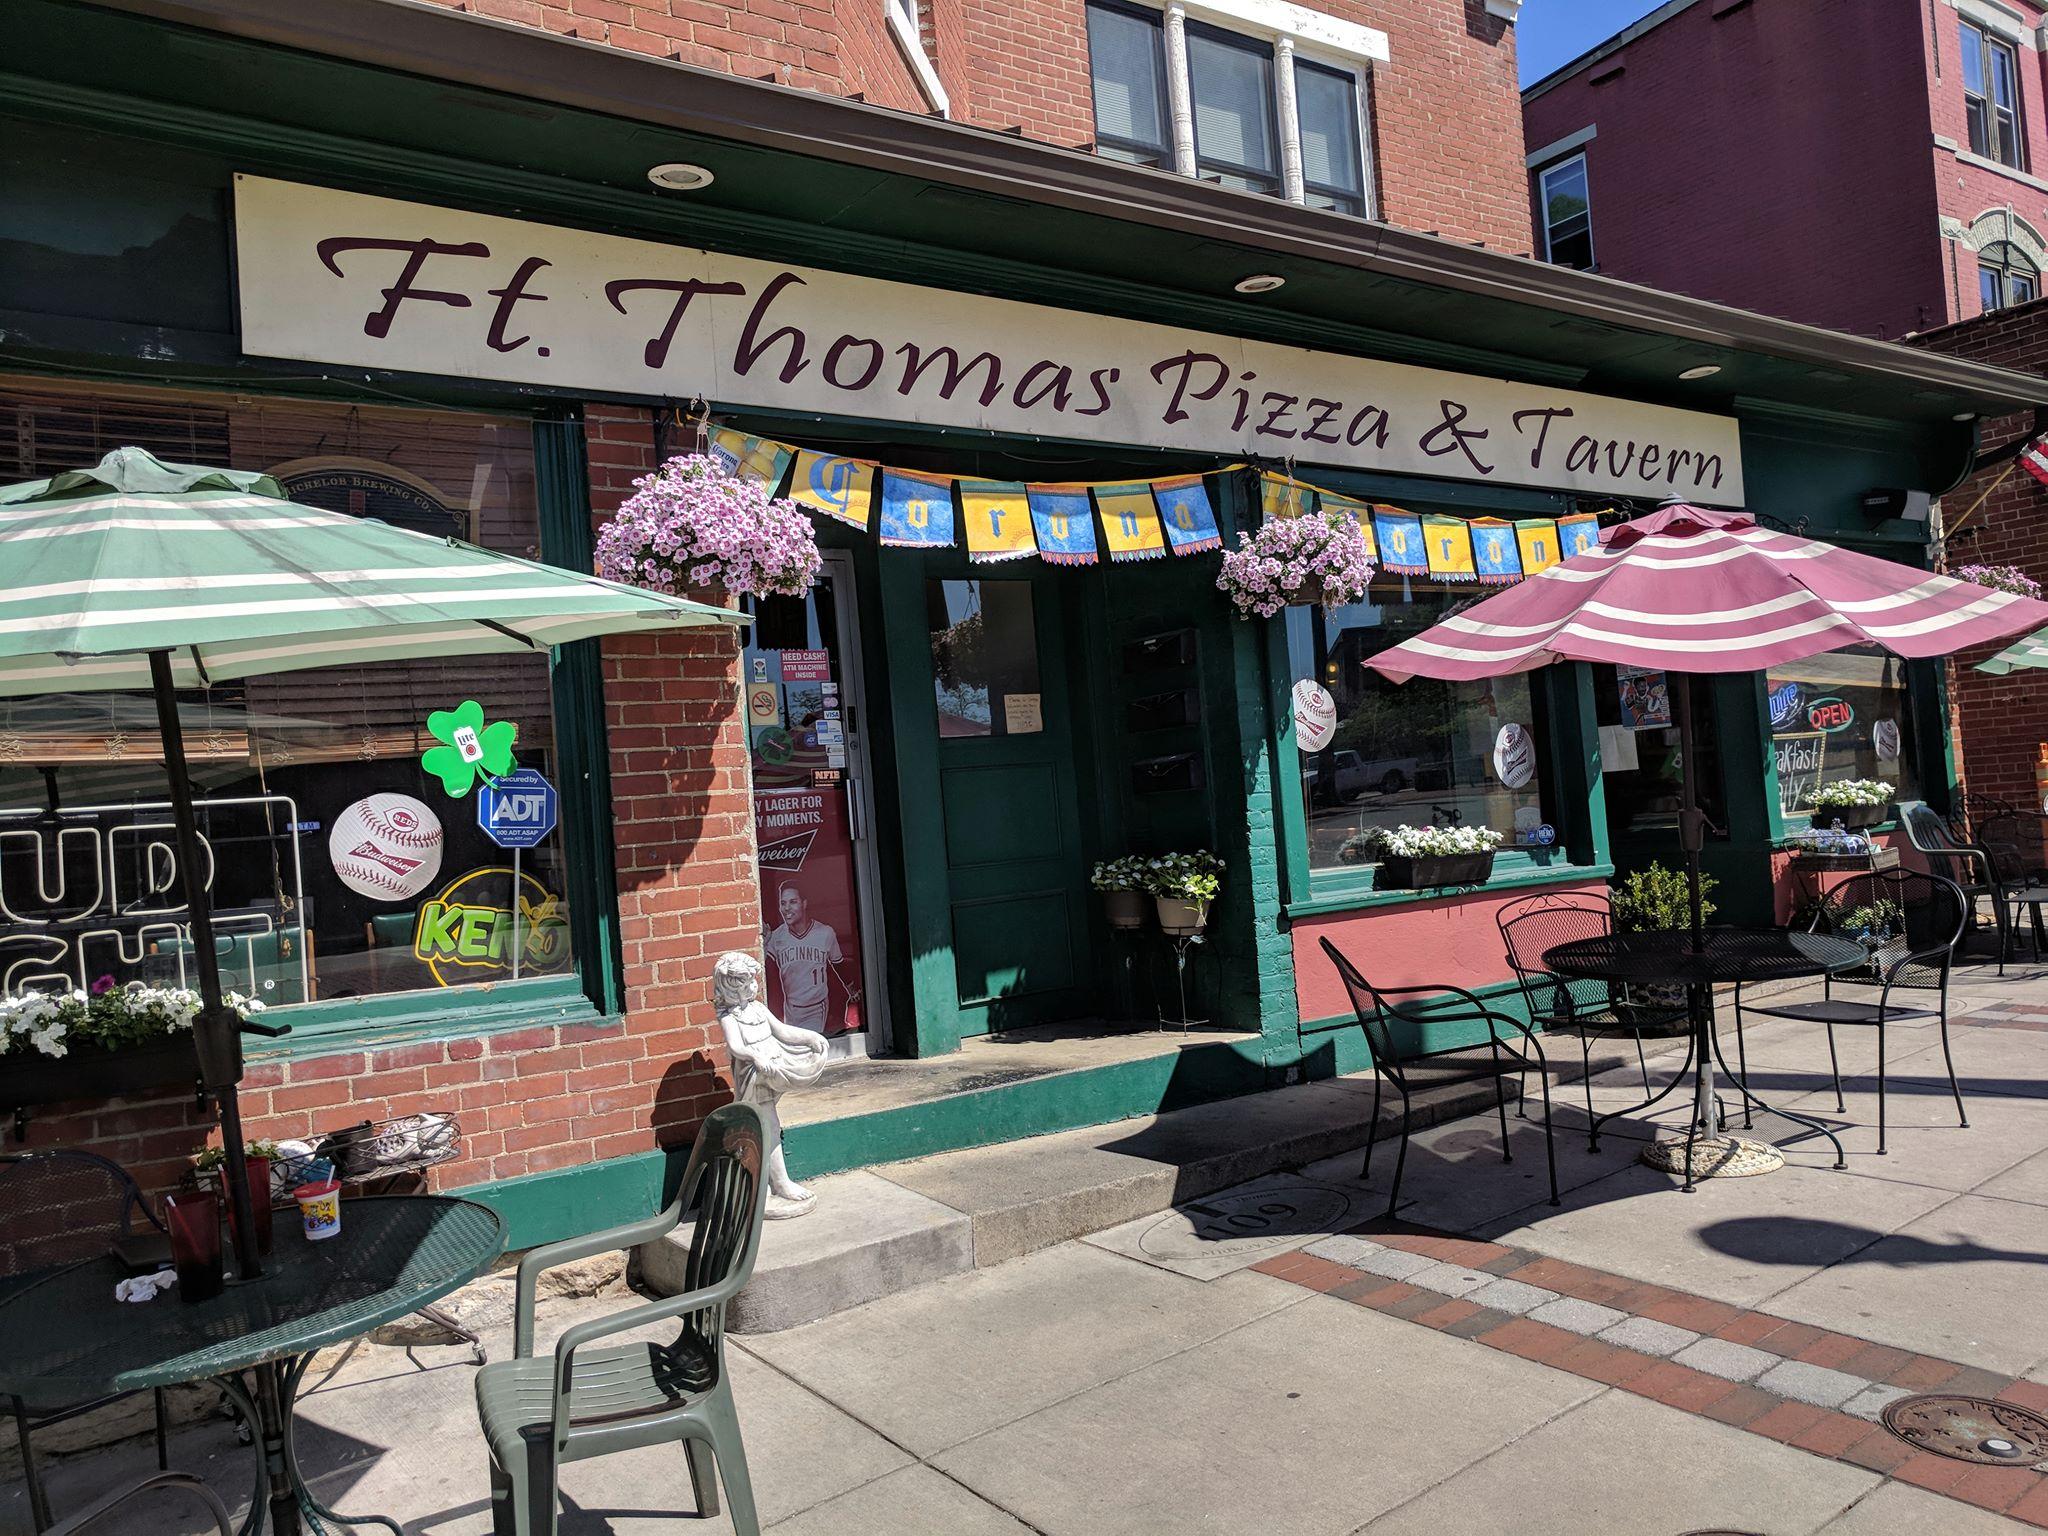 Pet Friendly Fort Thomas Pizza & Tavern